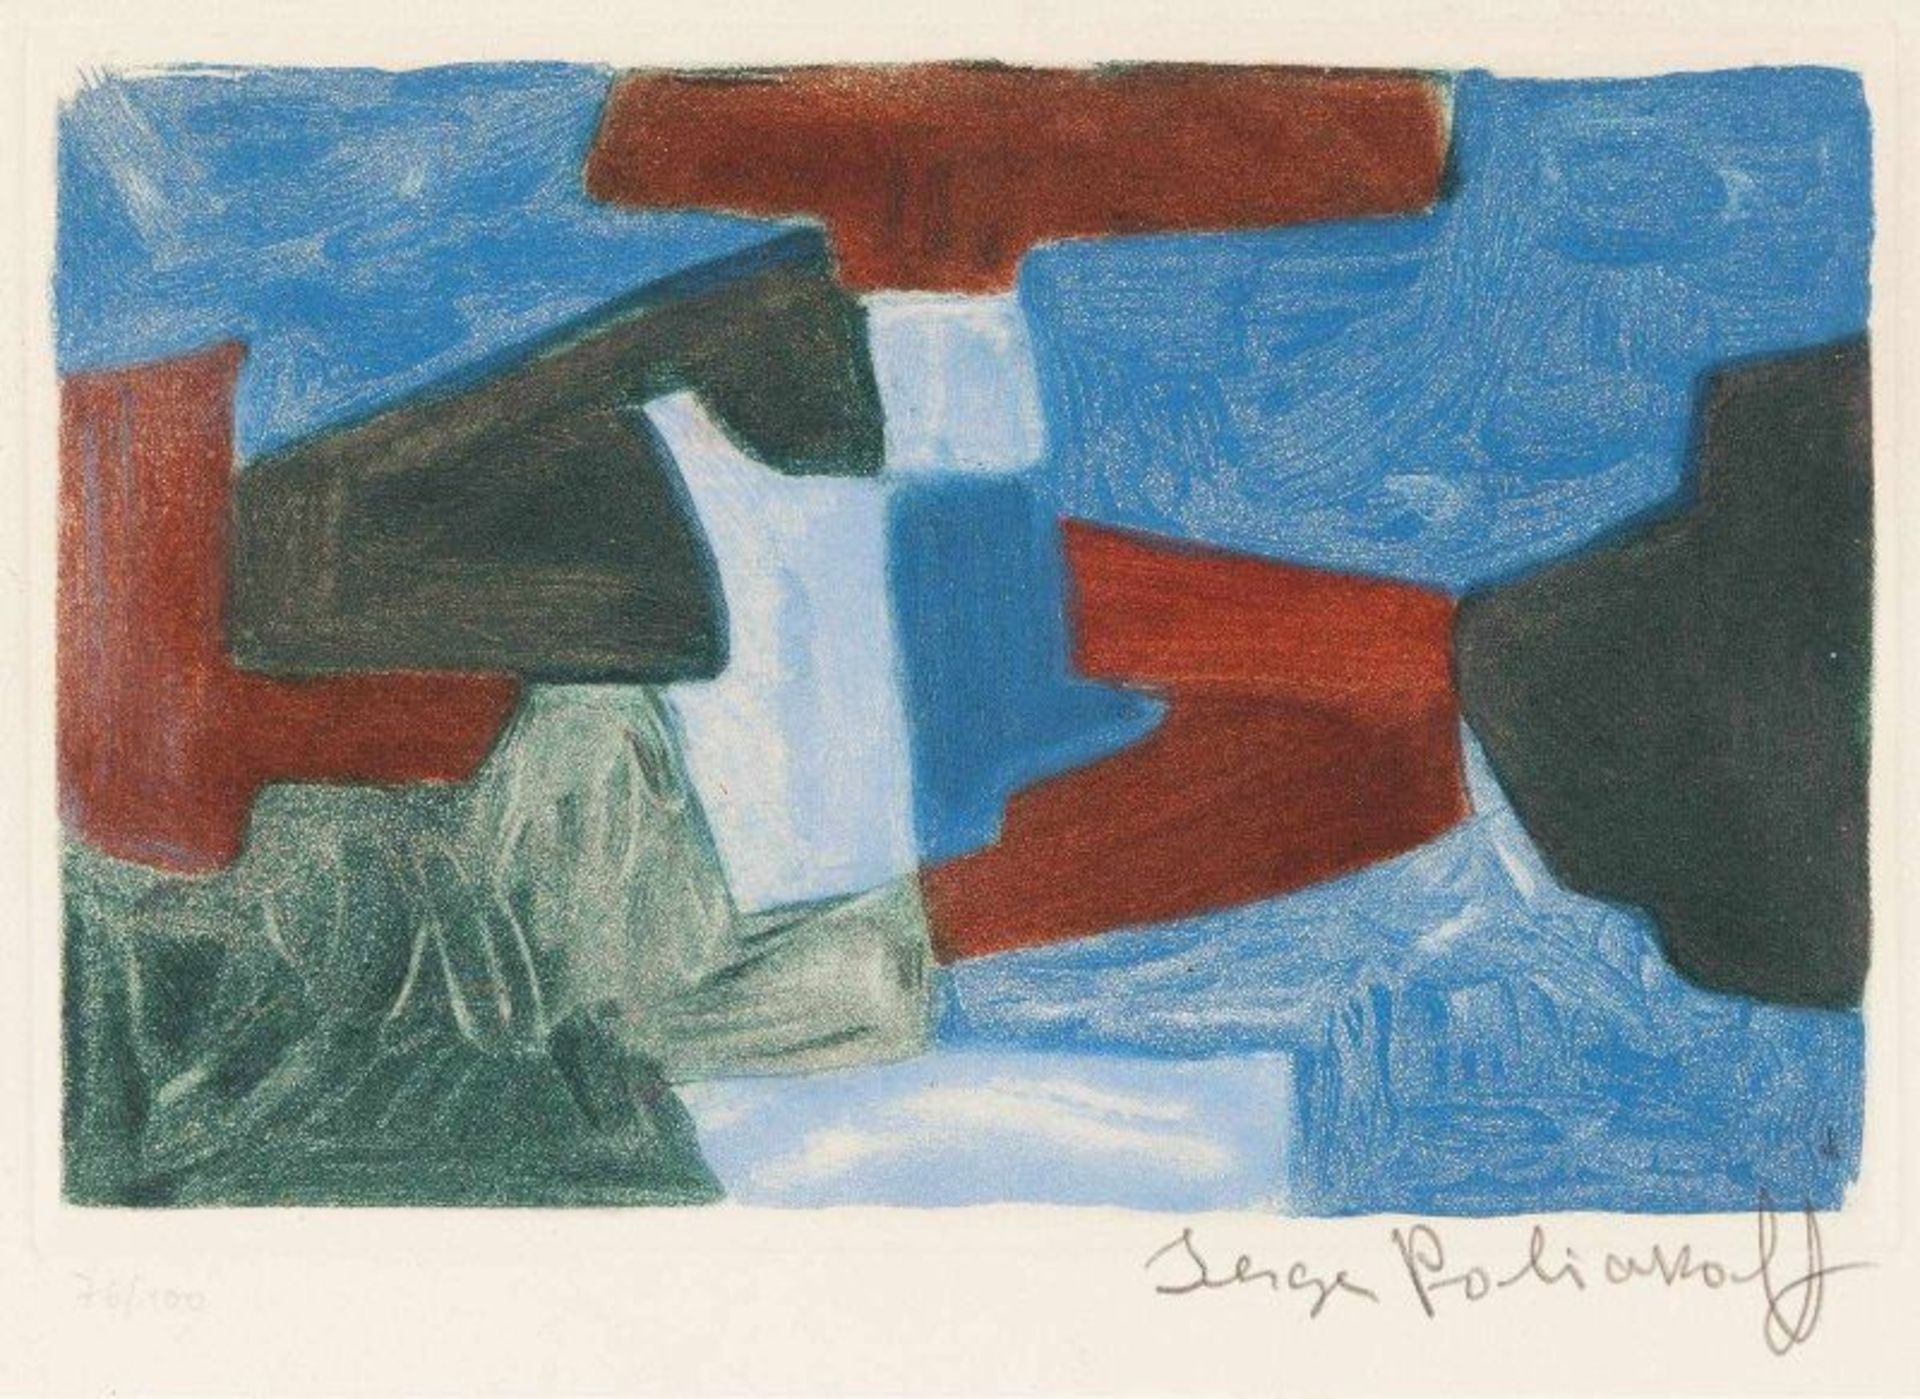 SERGE POLIAKOFF 1900 Moskau - 1969 Paris Composition Bleu, Vert, Rouge Farbaquatintaradierung auf